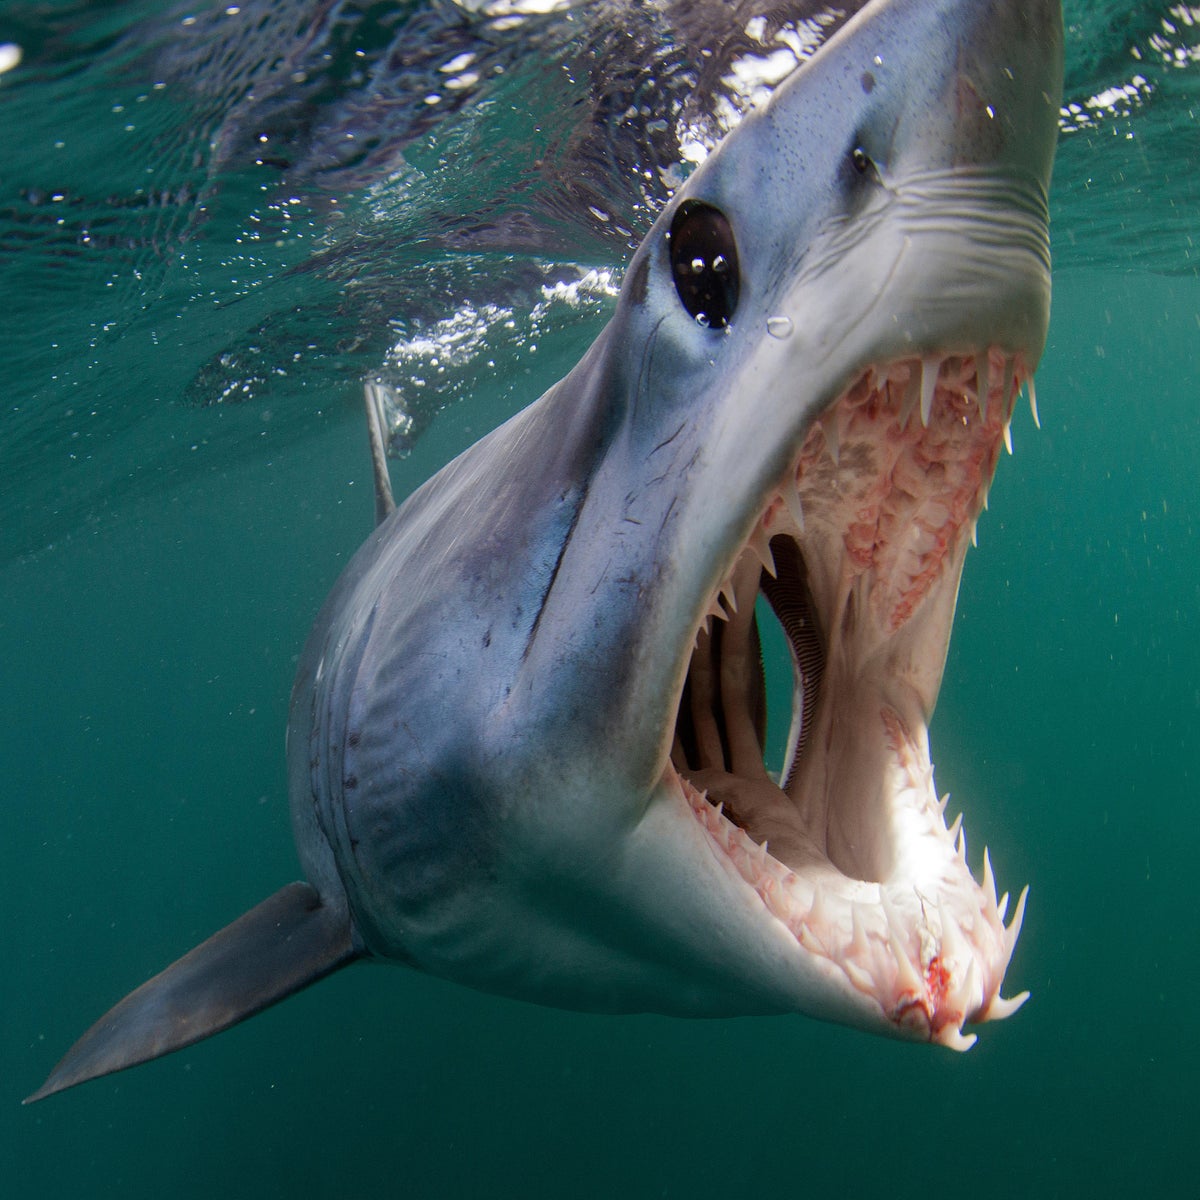 Understanding Atlantic Shark Fishing